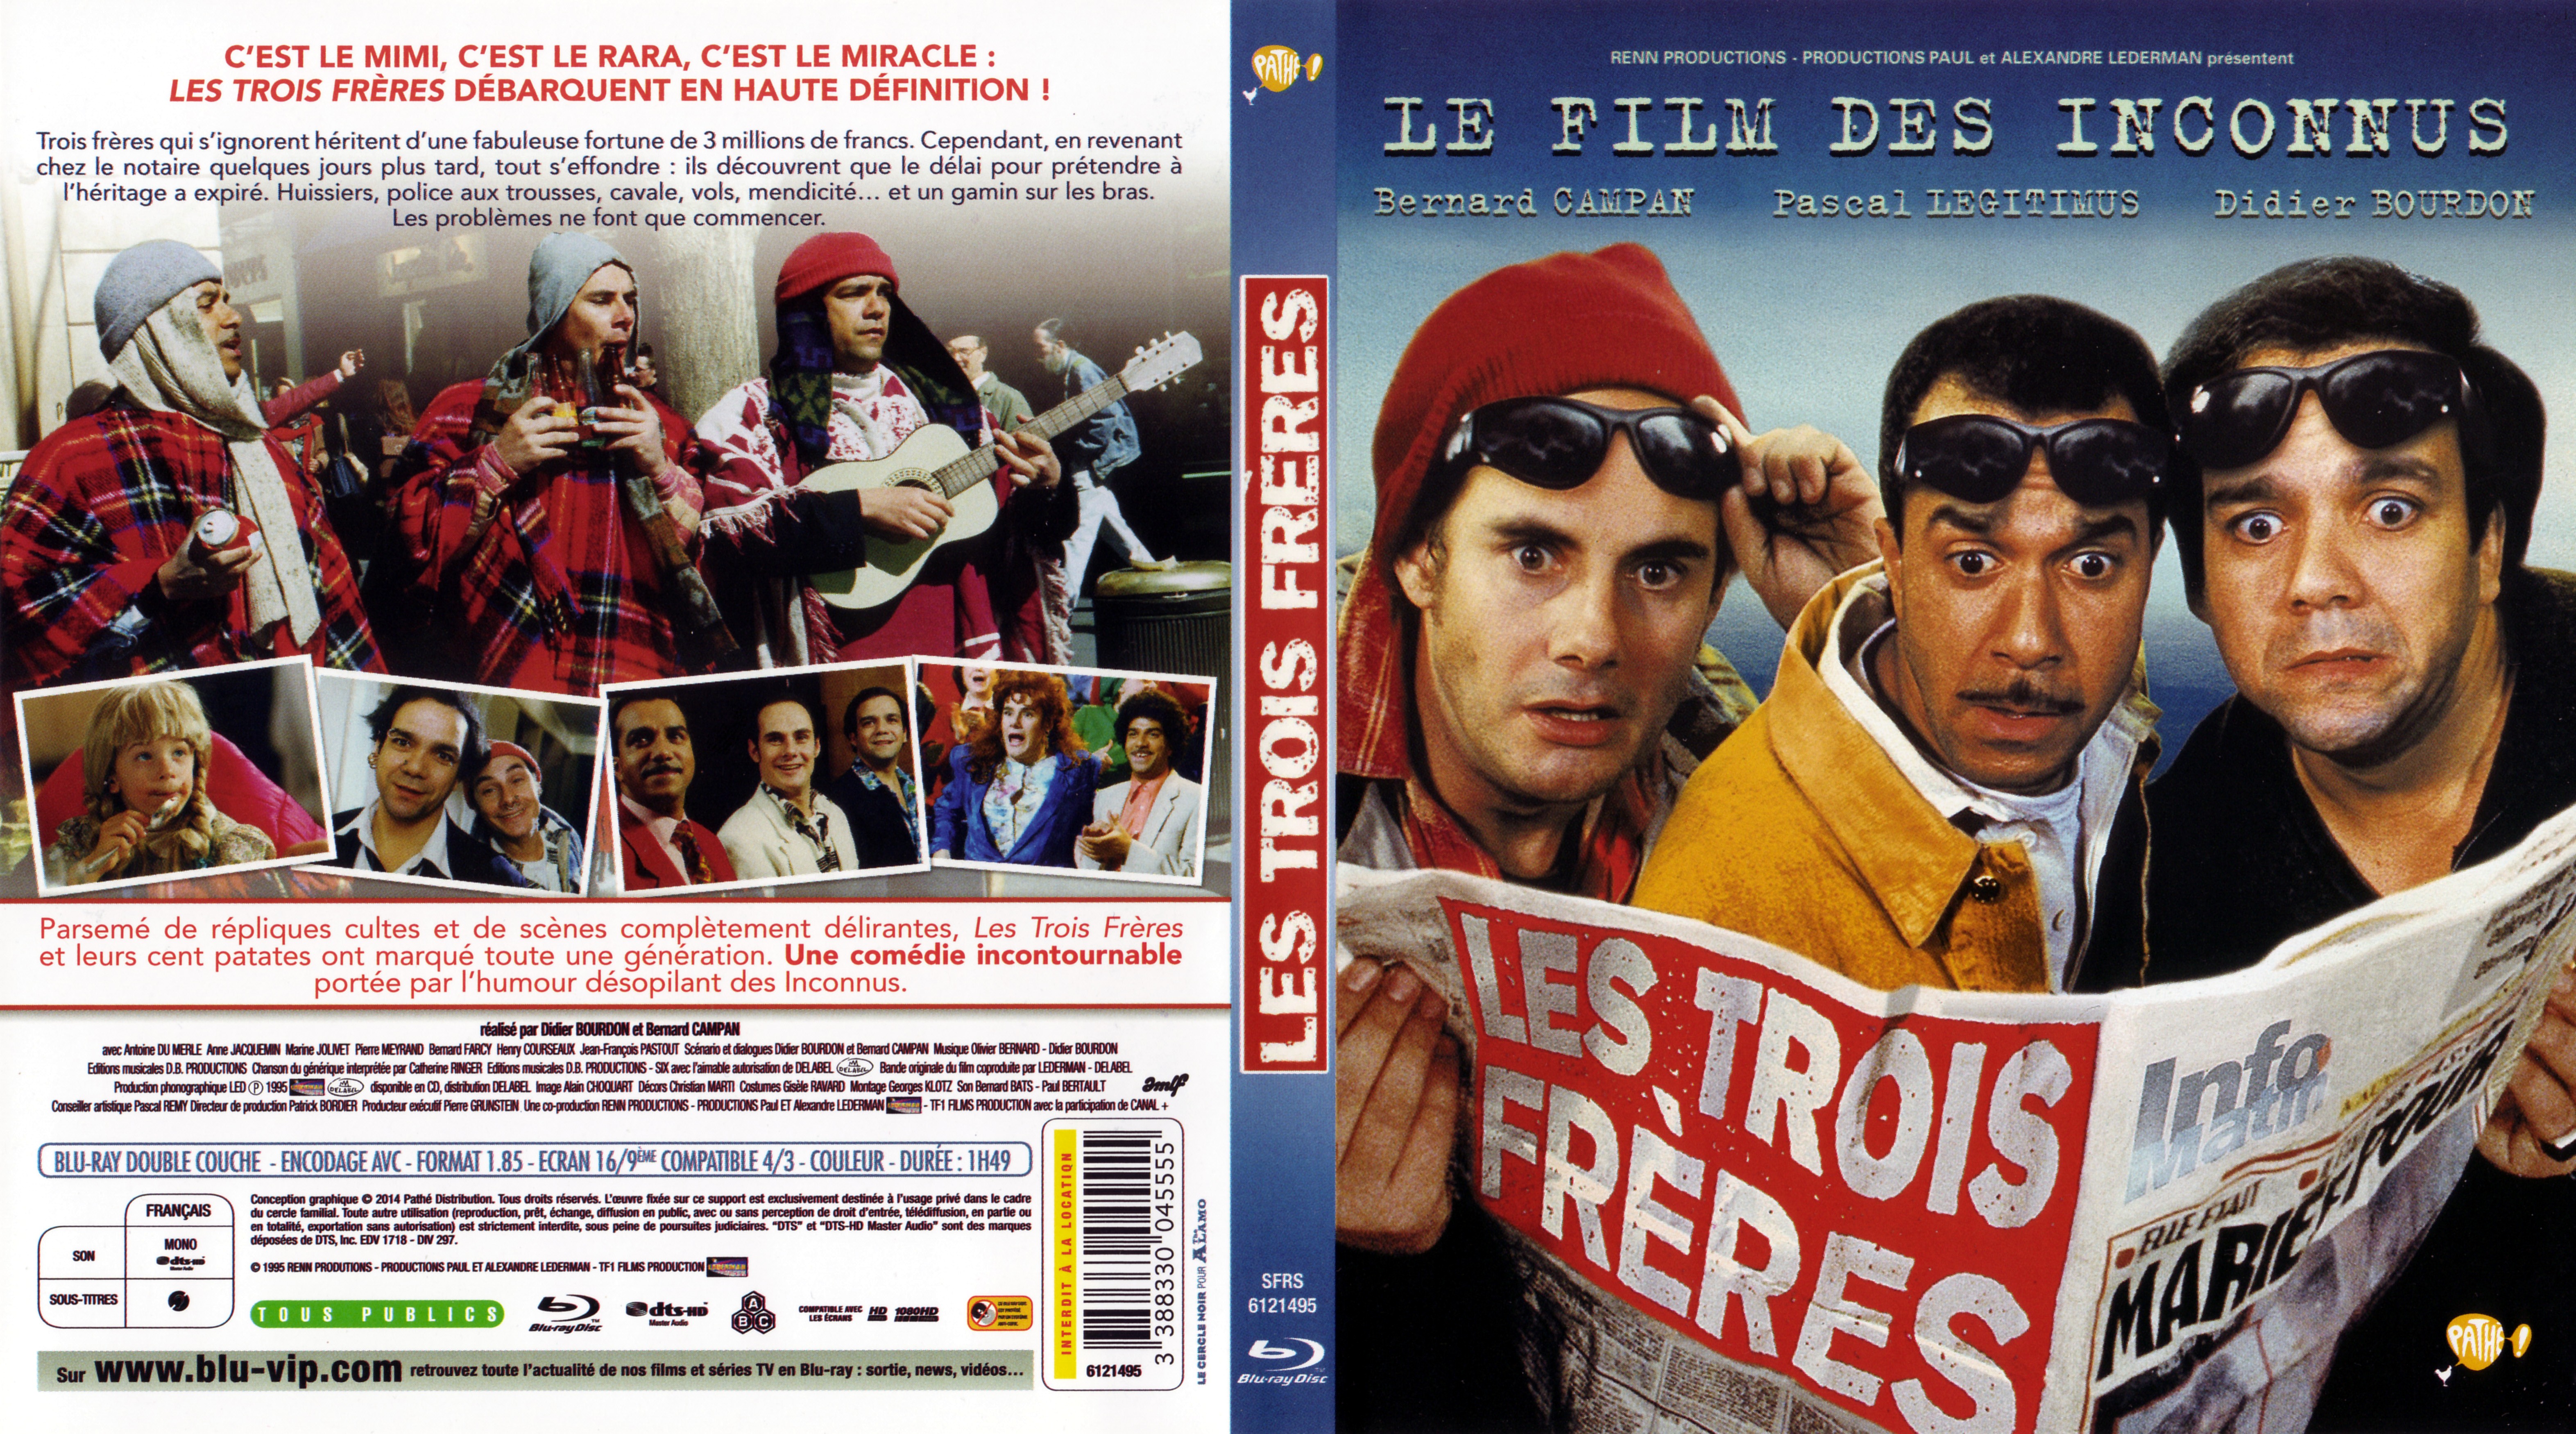 Jaquette DVD Les trois frres (BLU-RAY)